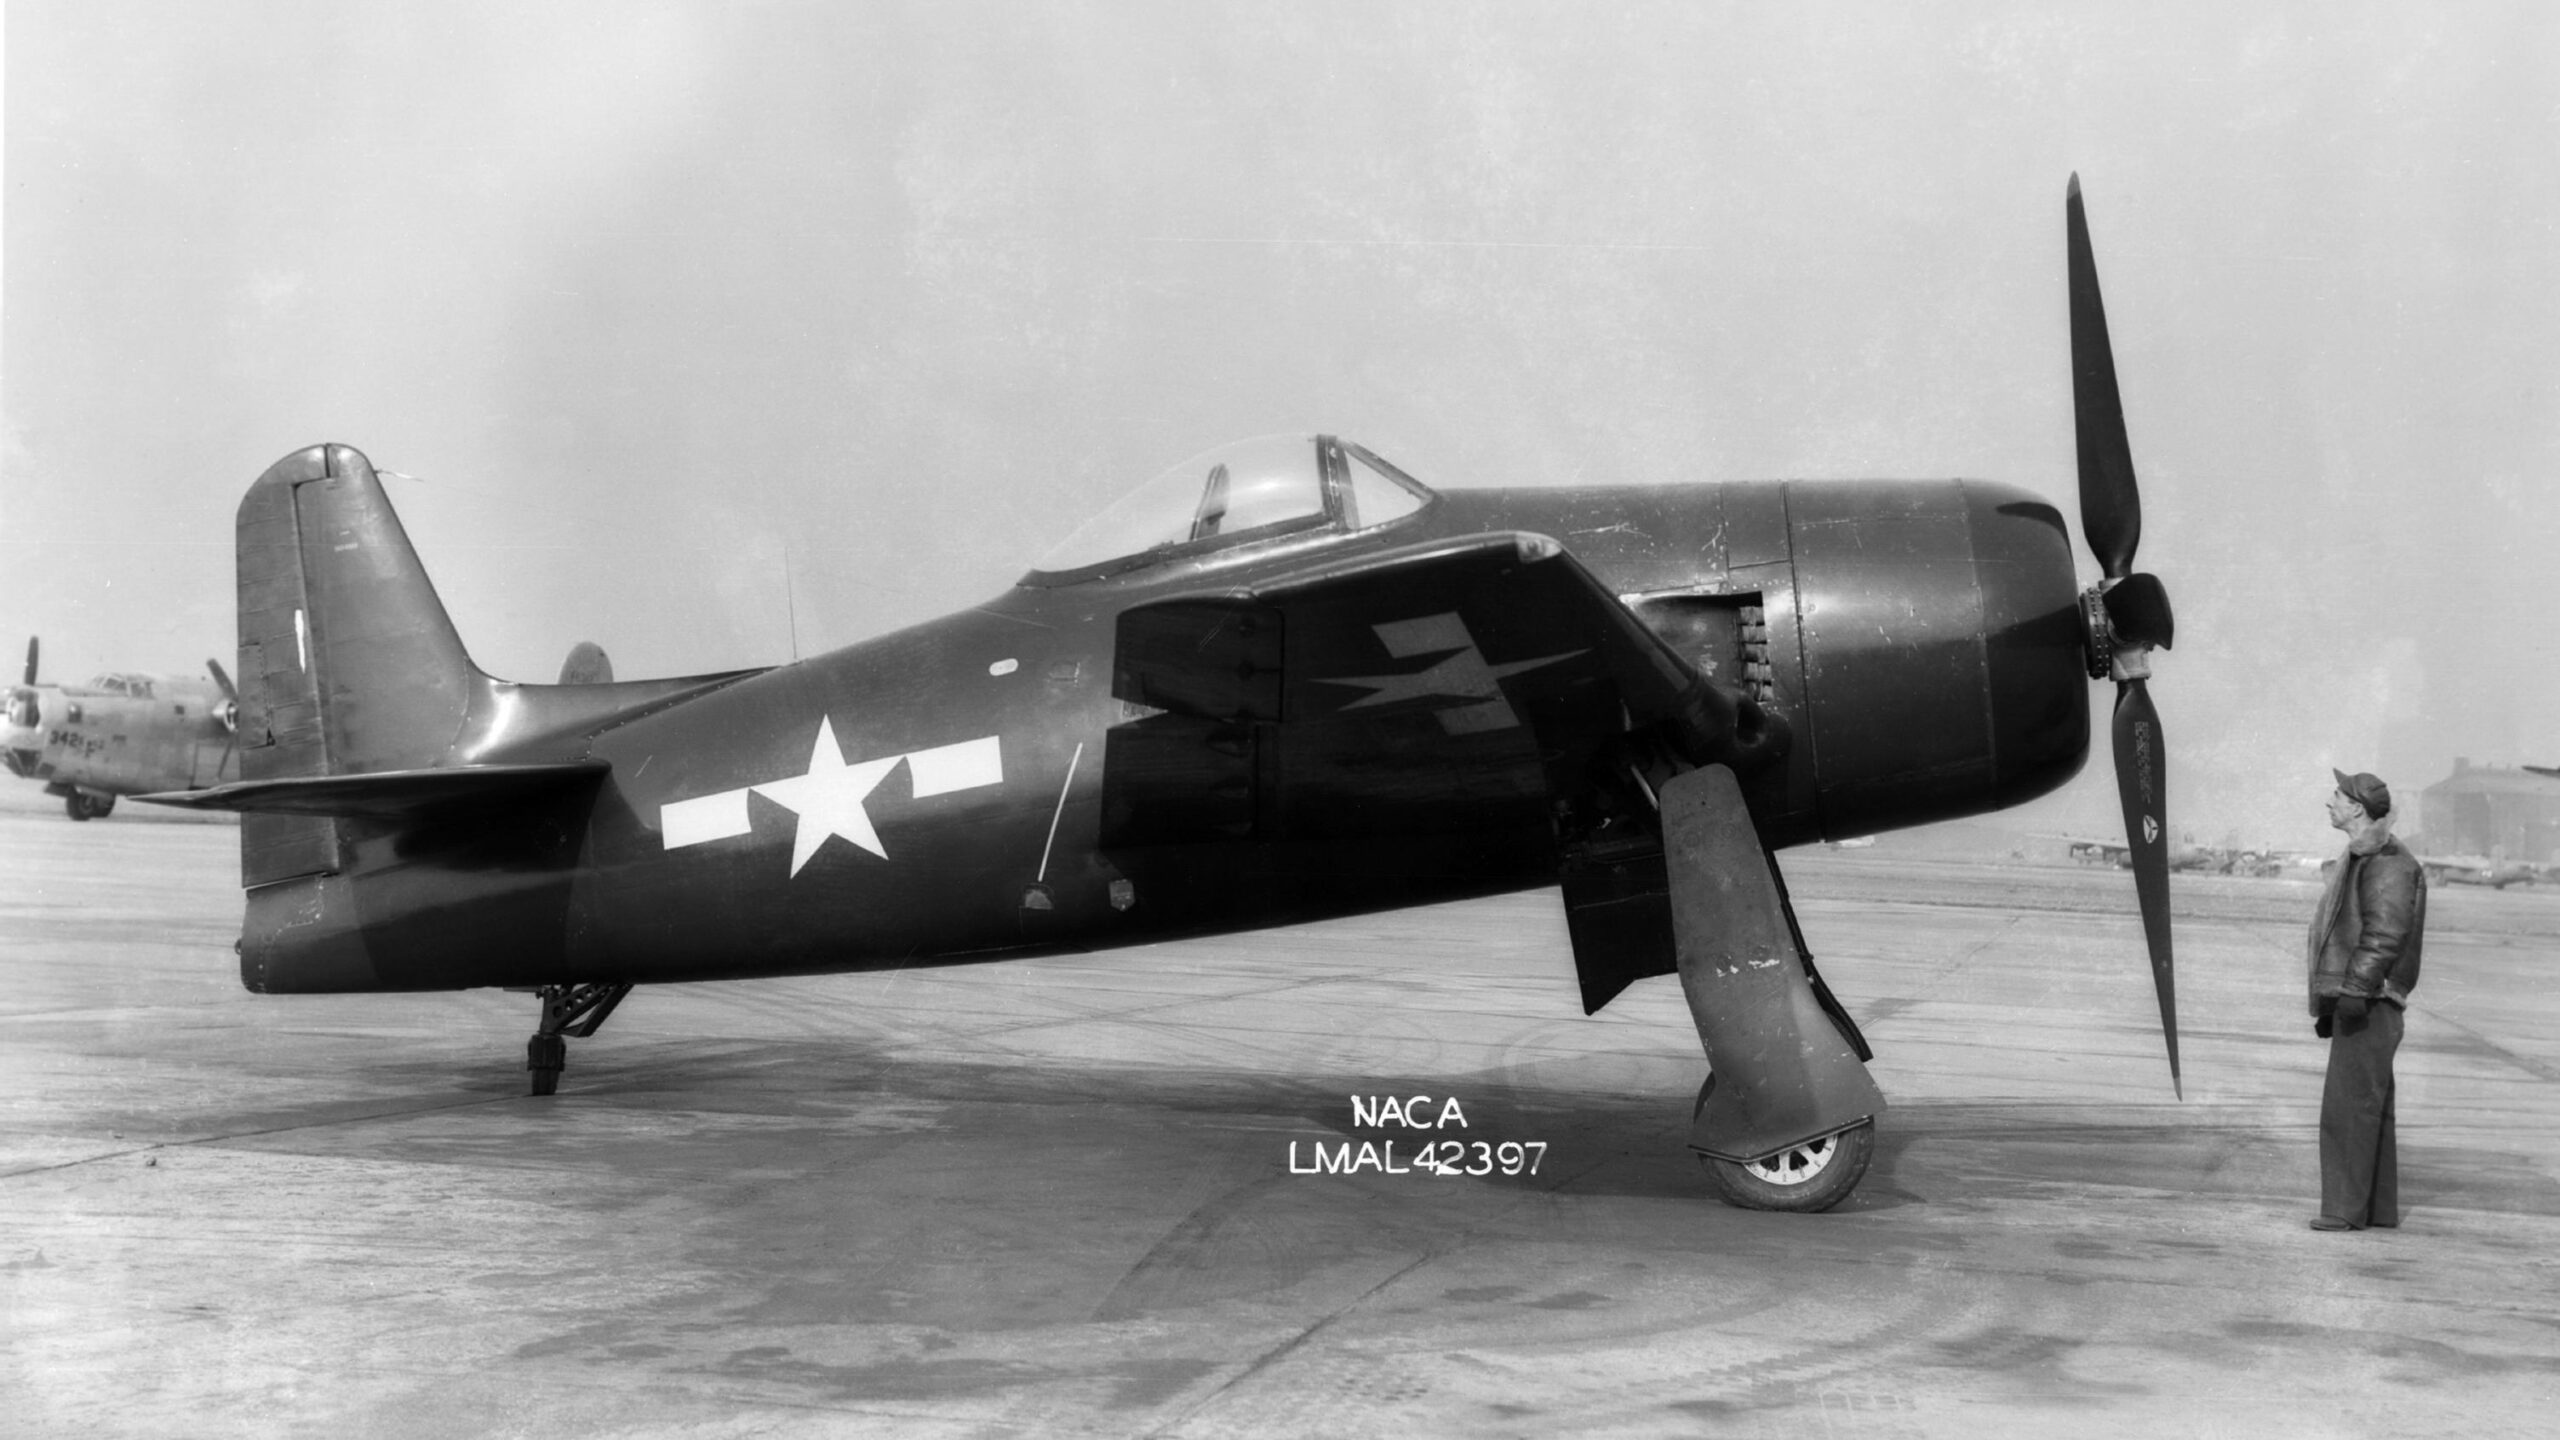 U.S. Navy Grumman XF8F-1 Bearcat prototype at the NACA Langley Research Center on February 5 1945